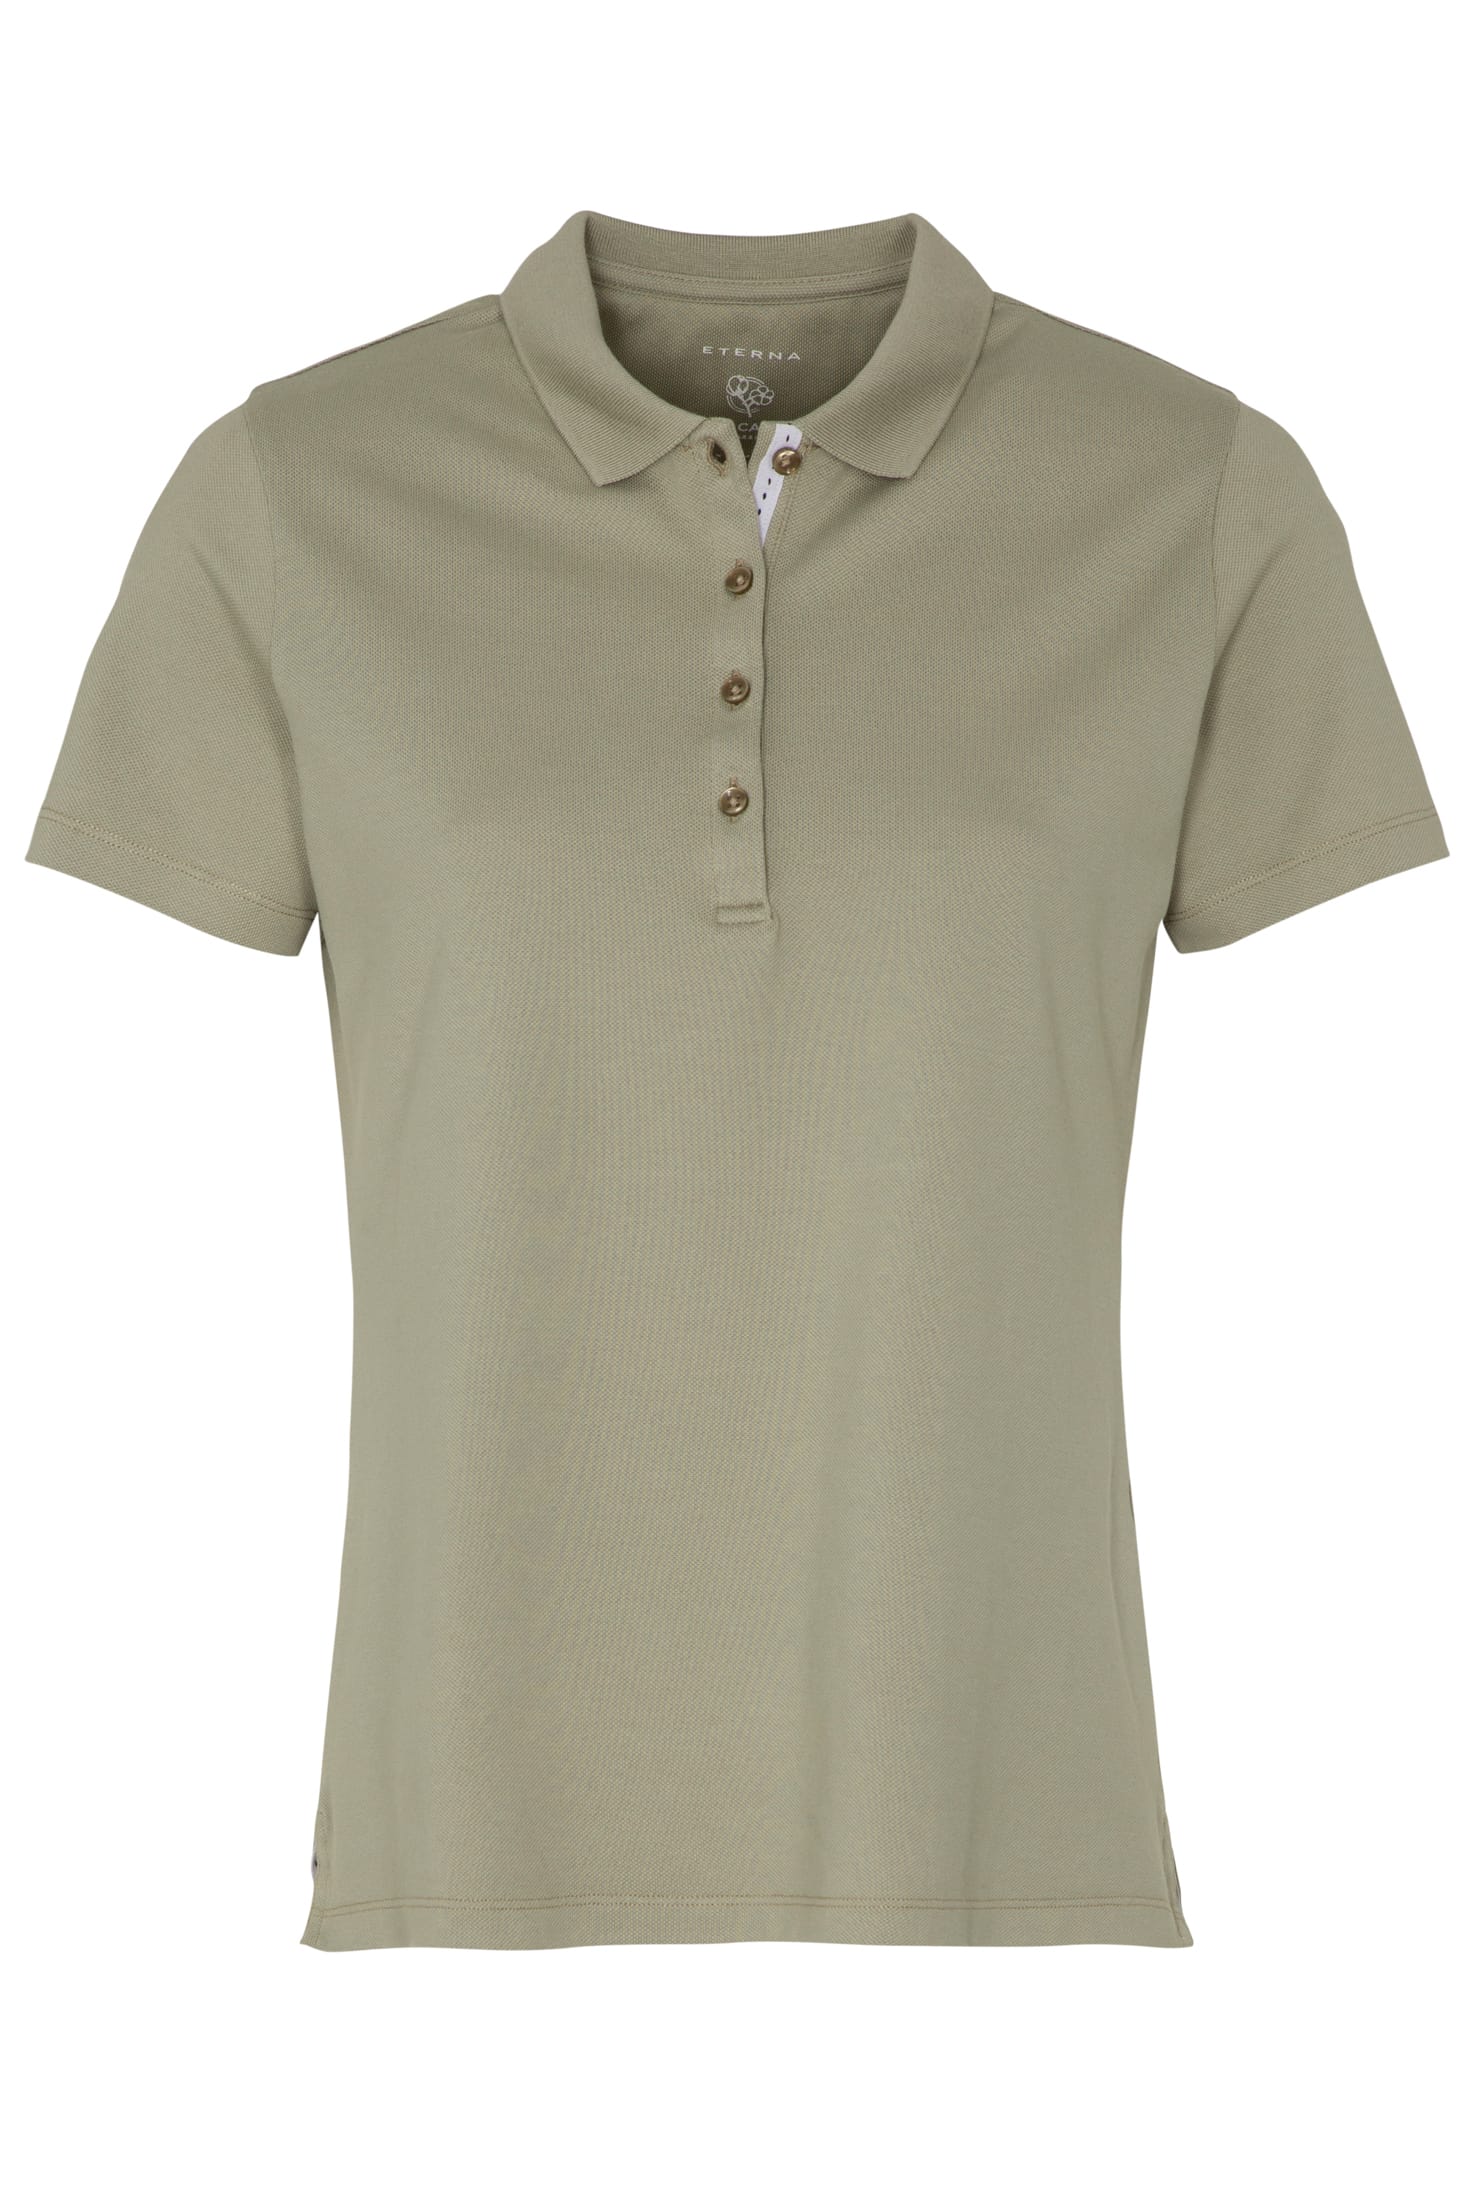 ETERNA CLASSIC FIT Poloshirt hellgrün | | Jeans-Manufaktur | pique Eterna Bekleidung | Poloshirts Damen 5535-41-H530